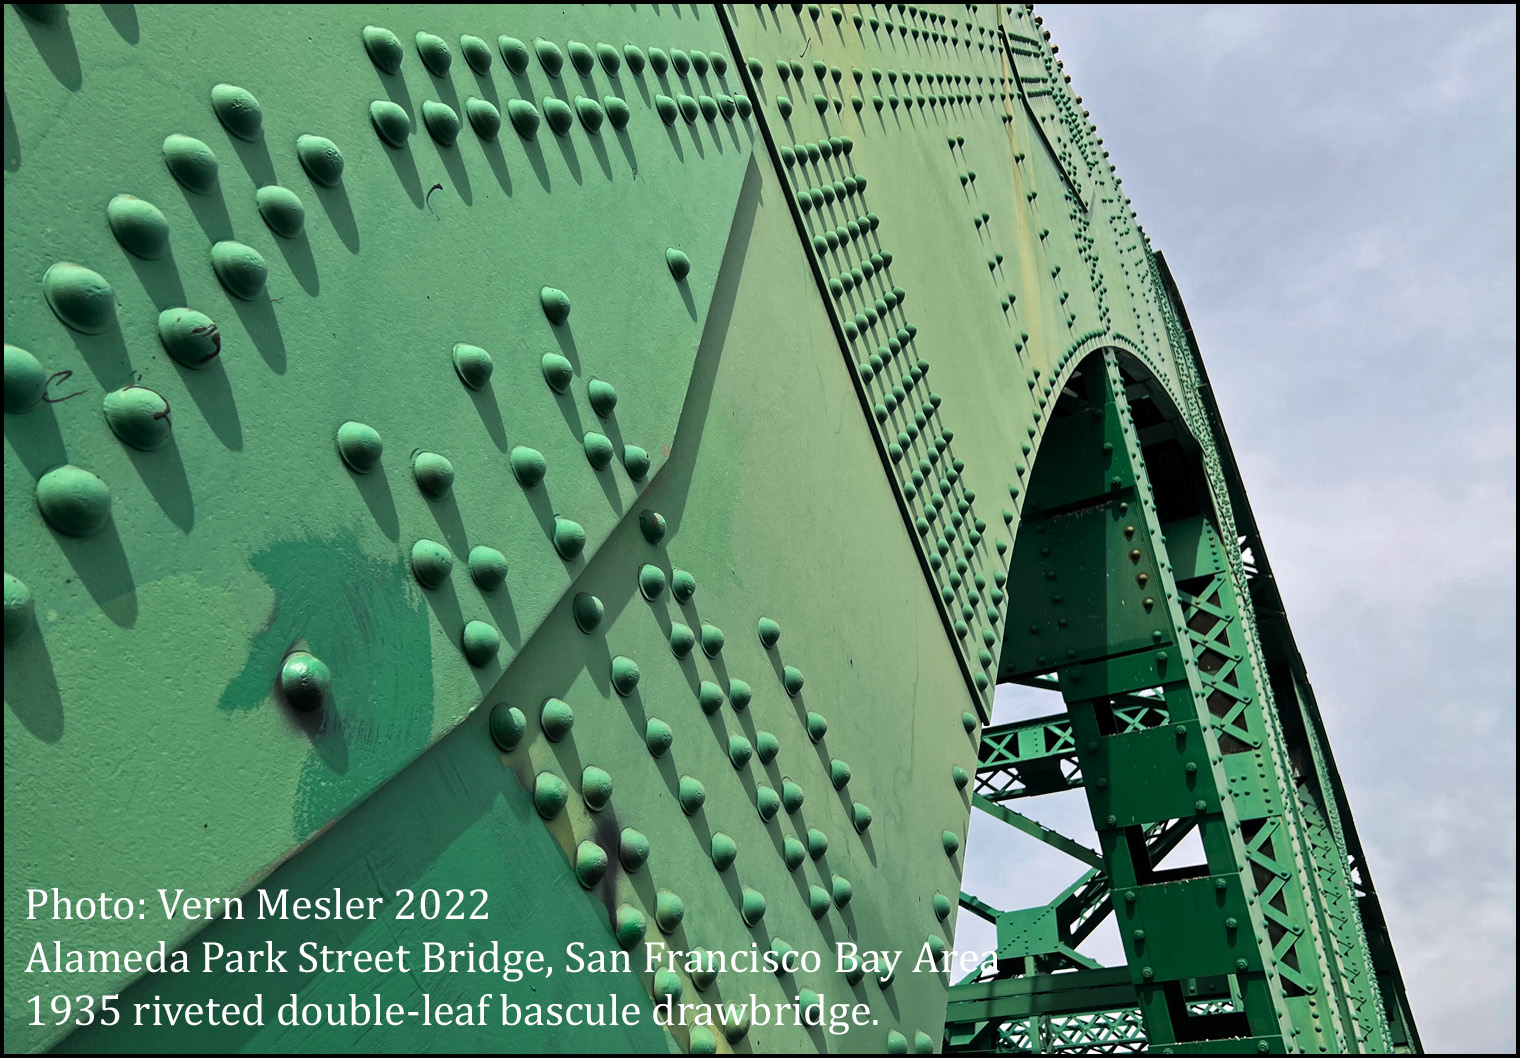 Alameda Park Street Bridge